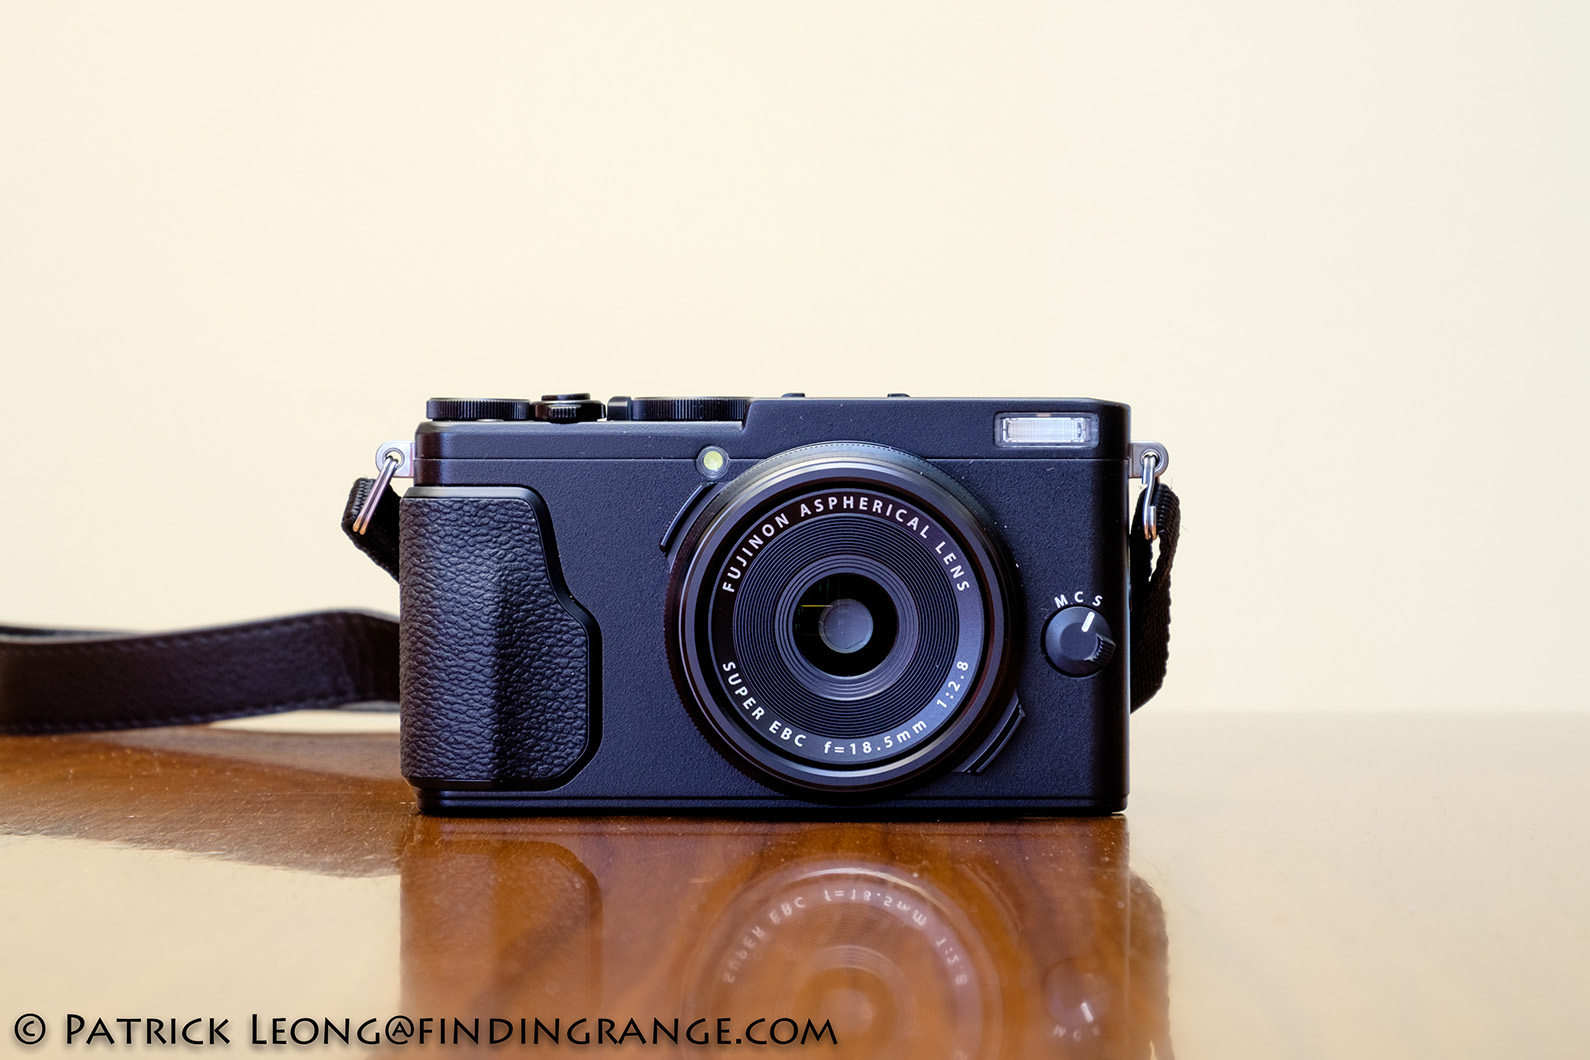 Fuji X70 Review: A New Compact X Series Camera